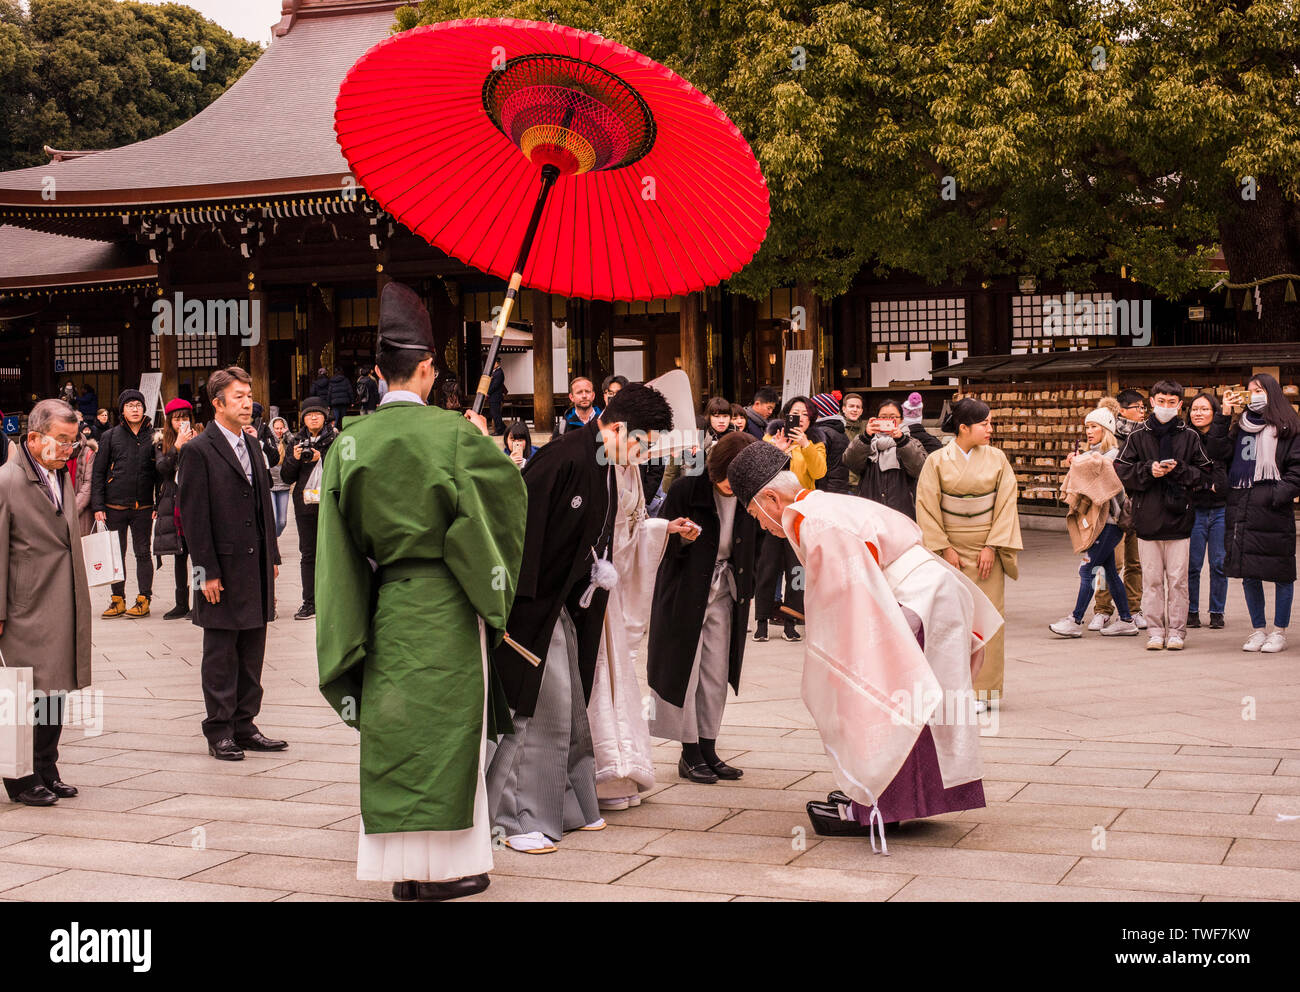 Curiosi a guardare matrimonio tradizionale a Meiji Jingu in Shibuya di Tokyo in Giappone. Foto Stock